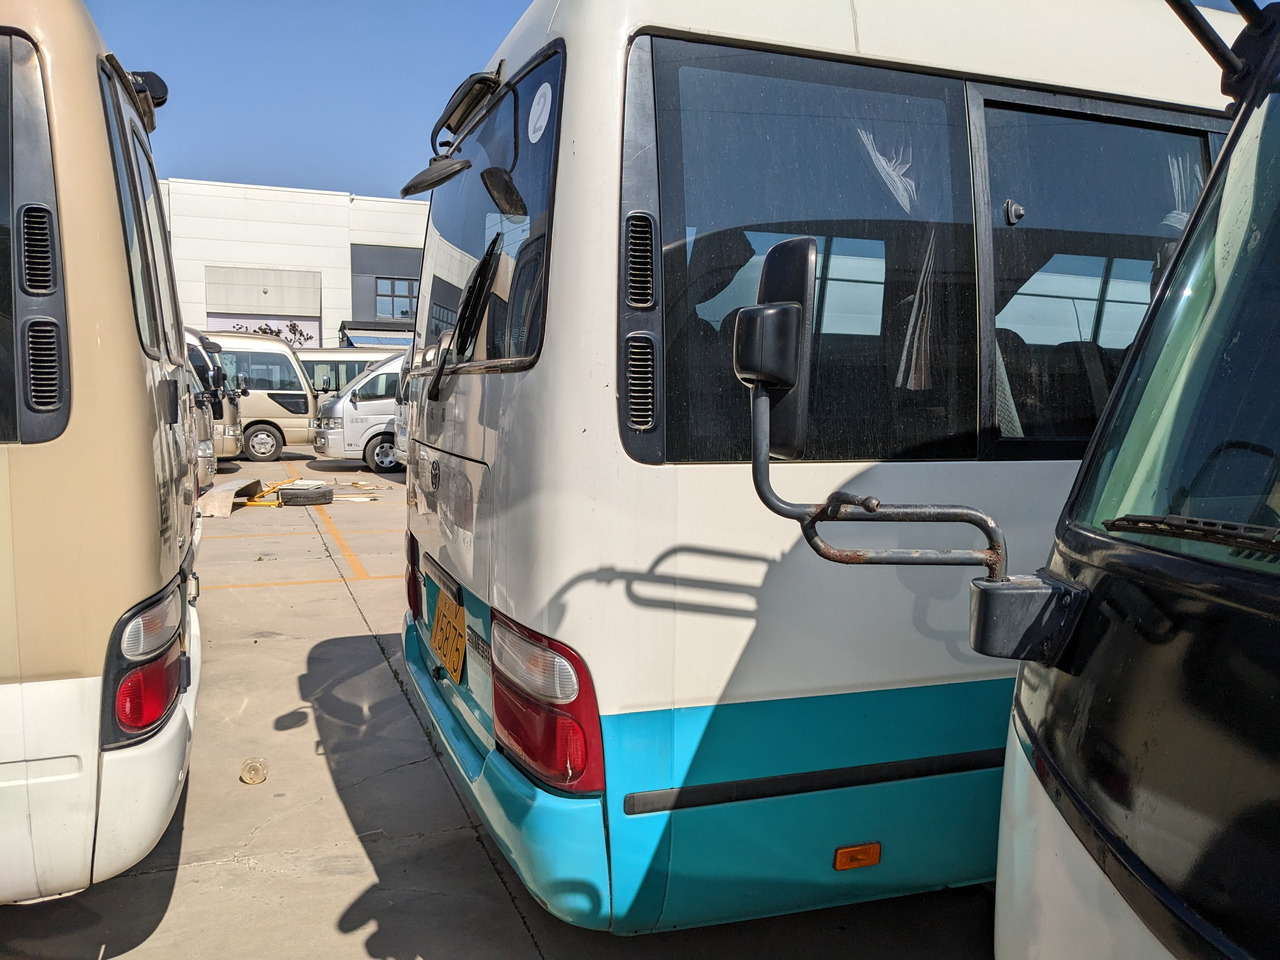 Minibus, Passenger van TOYOTA Coaster passenger bus white and blue petrol engine minivan: picture 5